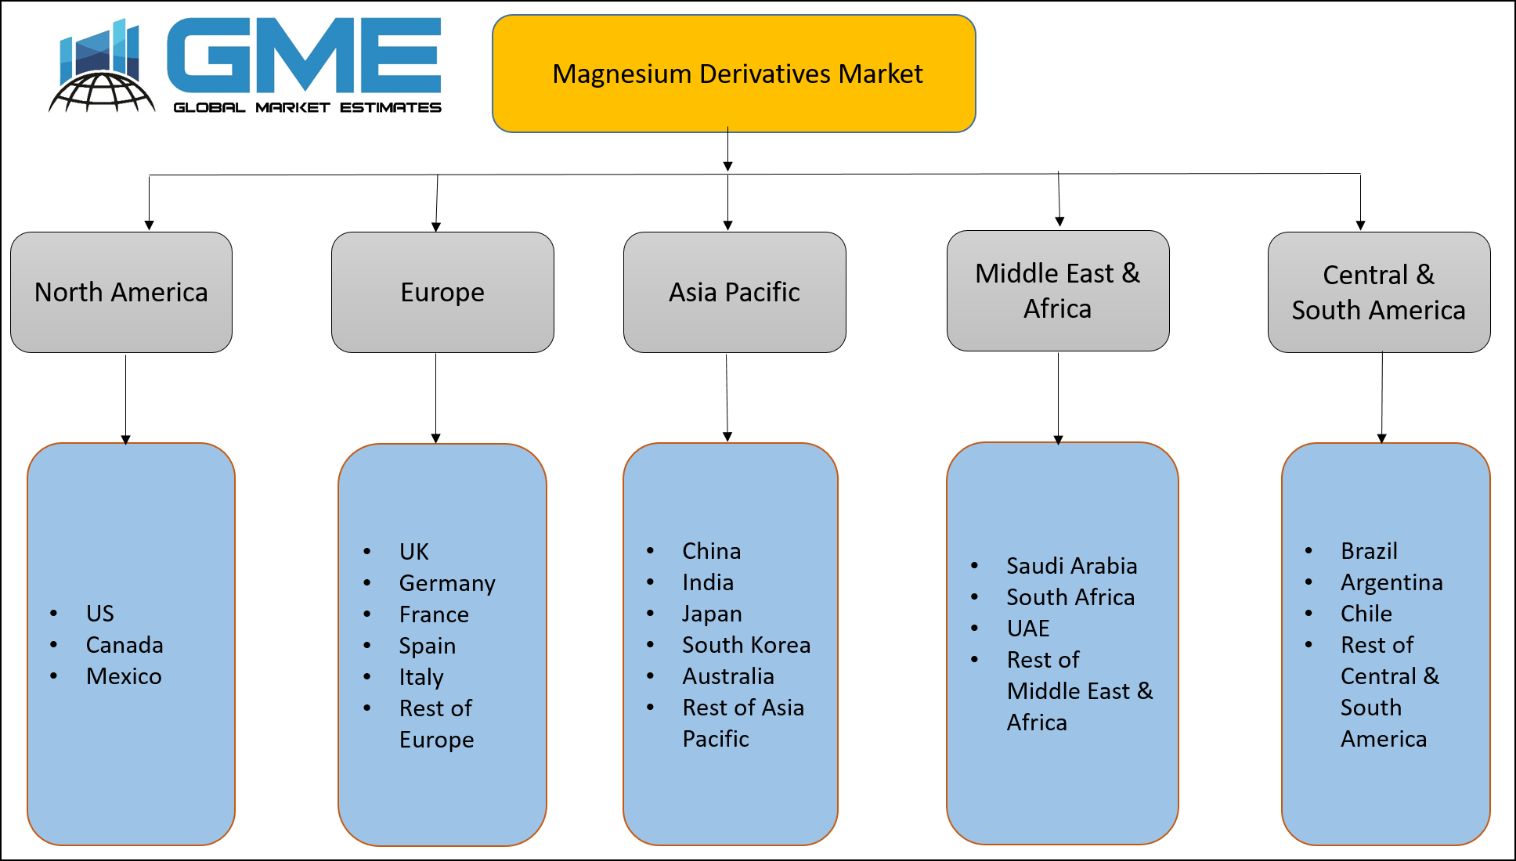 Magnesium Derivatives Market